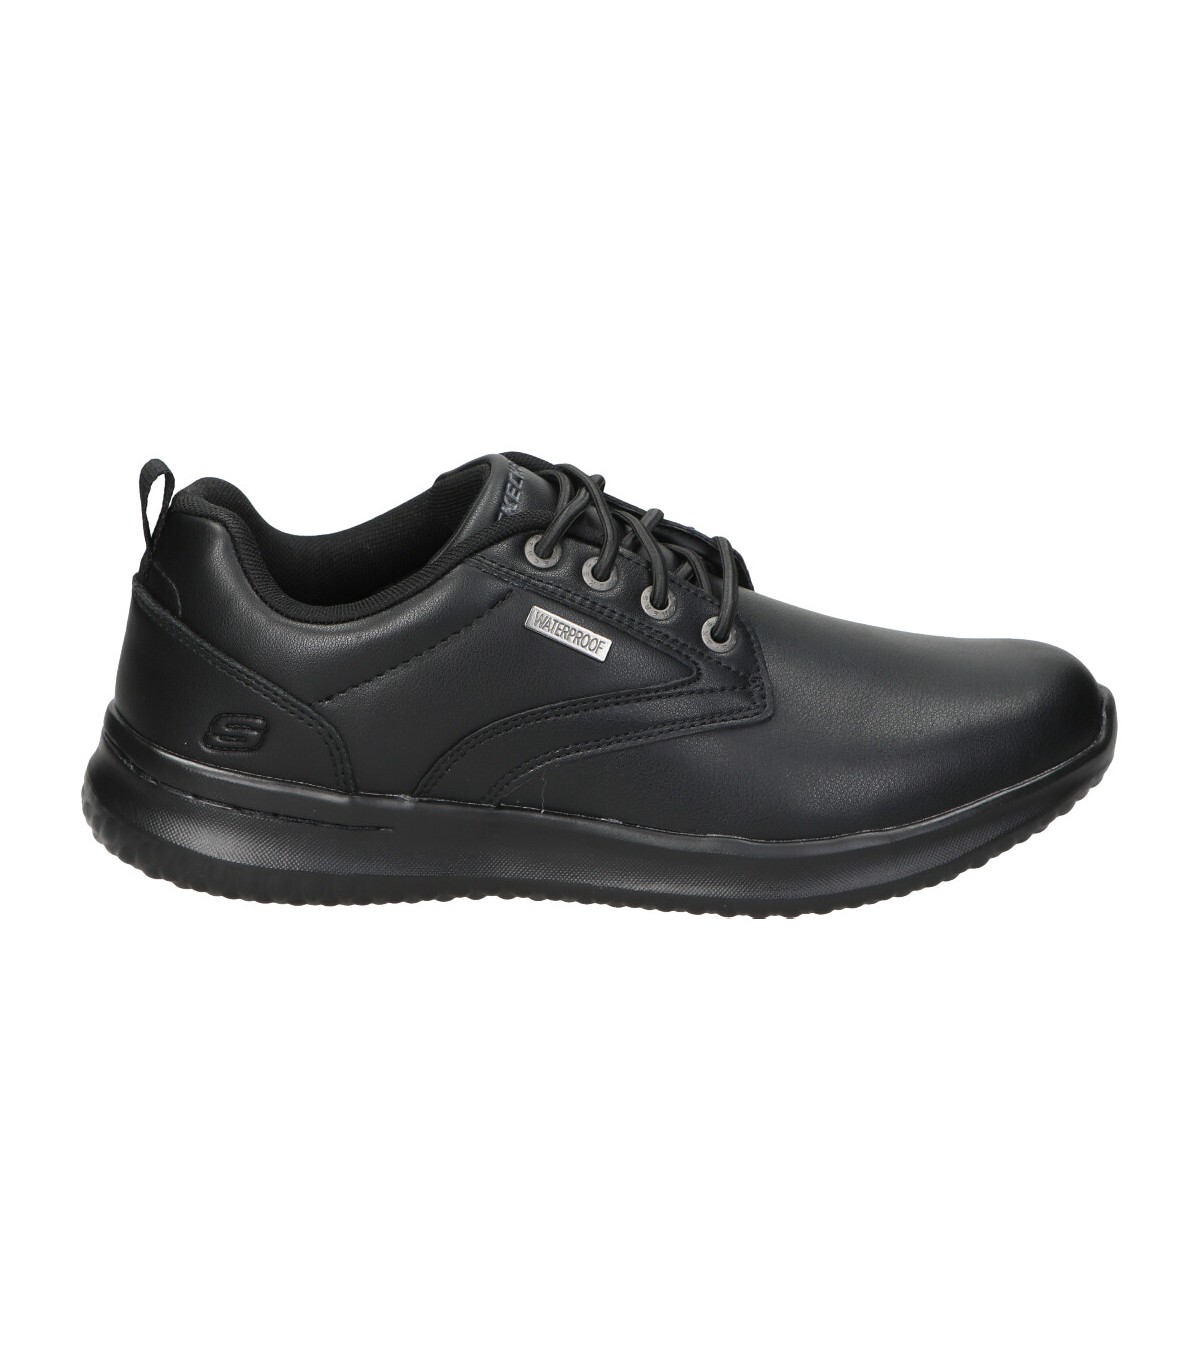 Zapatos negros de Skechers Delson Antigo online en MEGACALZADO